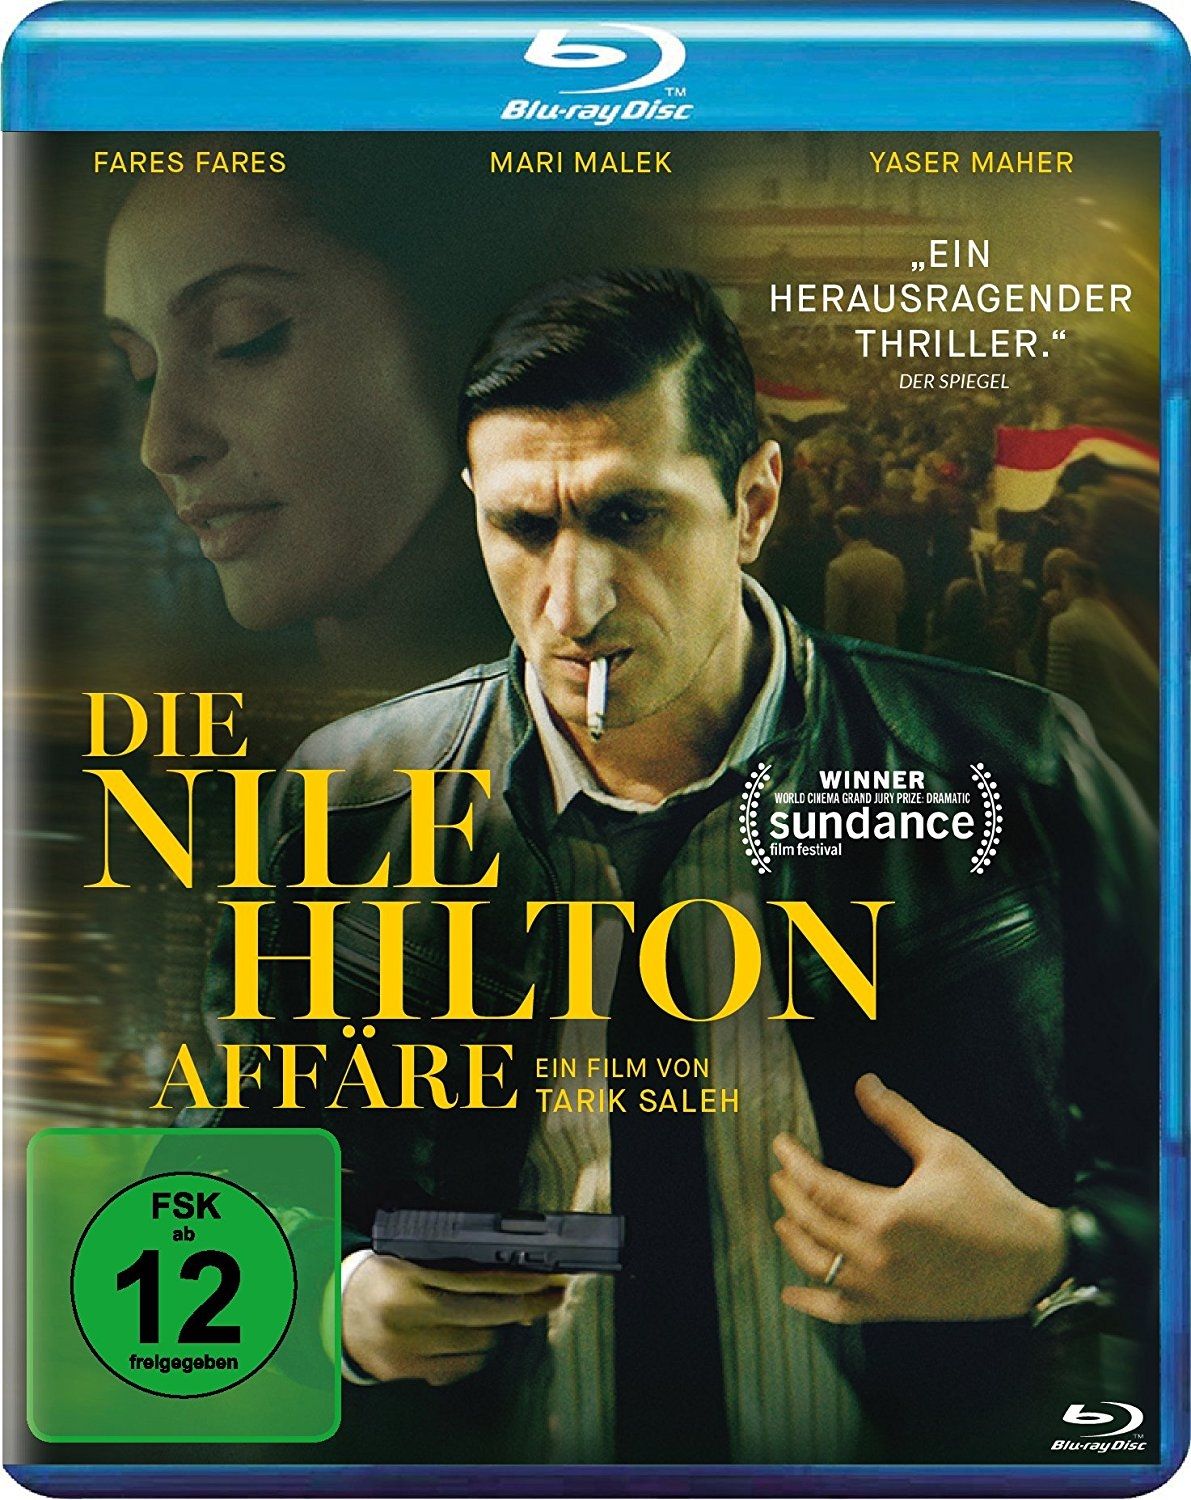 Nile Hilton Affäre, Die (BLURAY)